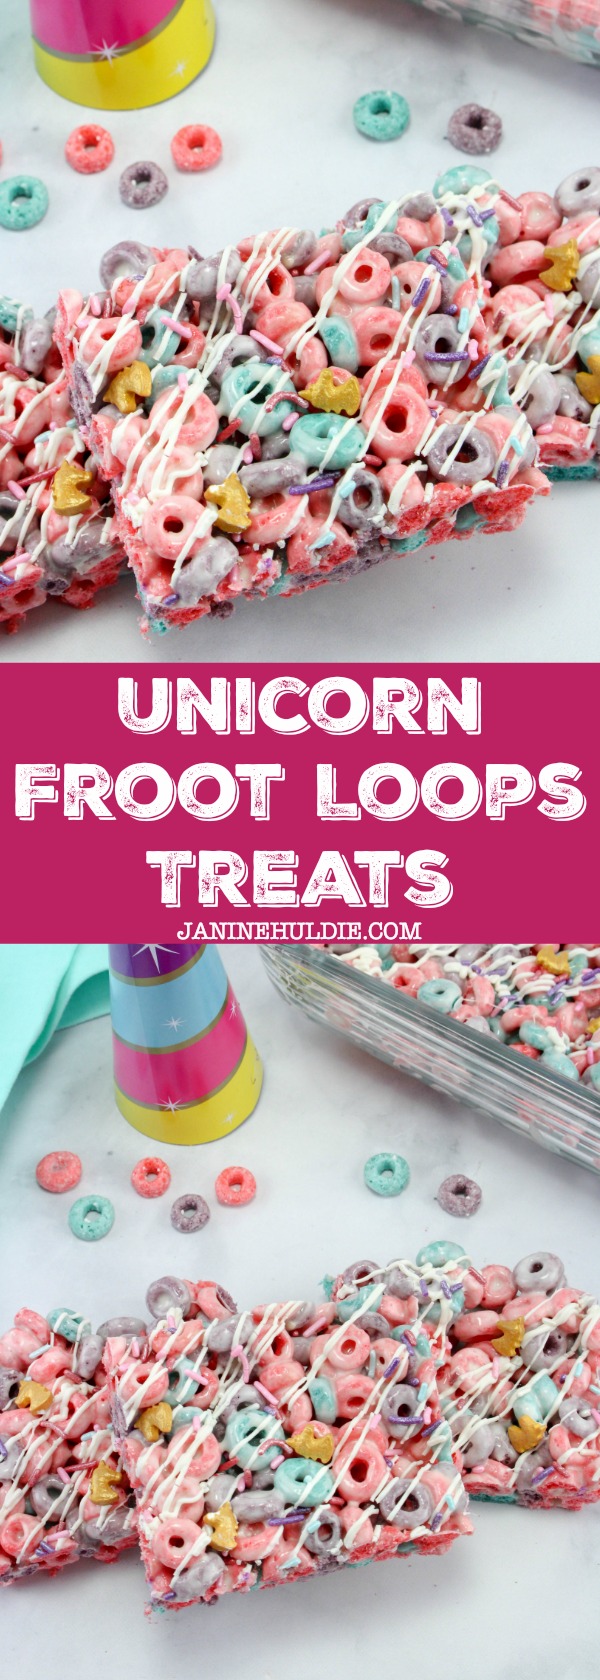 Unicorn Froot Loops Treats Recipe